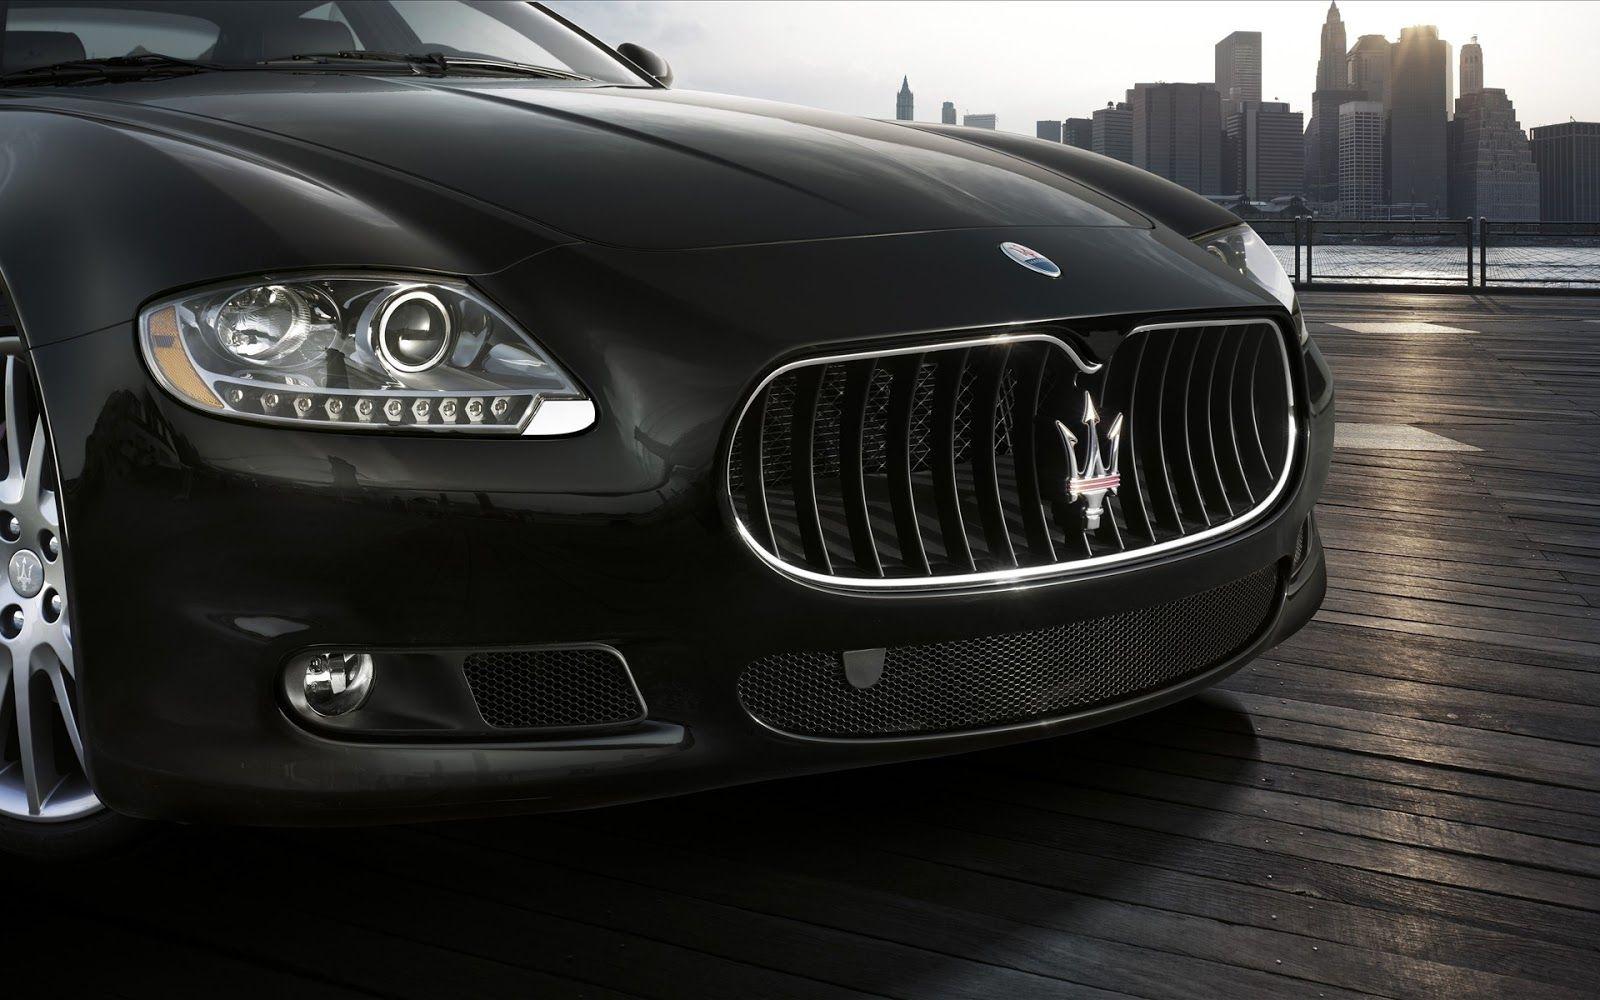 Trident Car Logo - Maserati Logo, Maserati Car Symbol Meaning and History | Car Brand ...